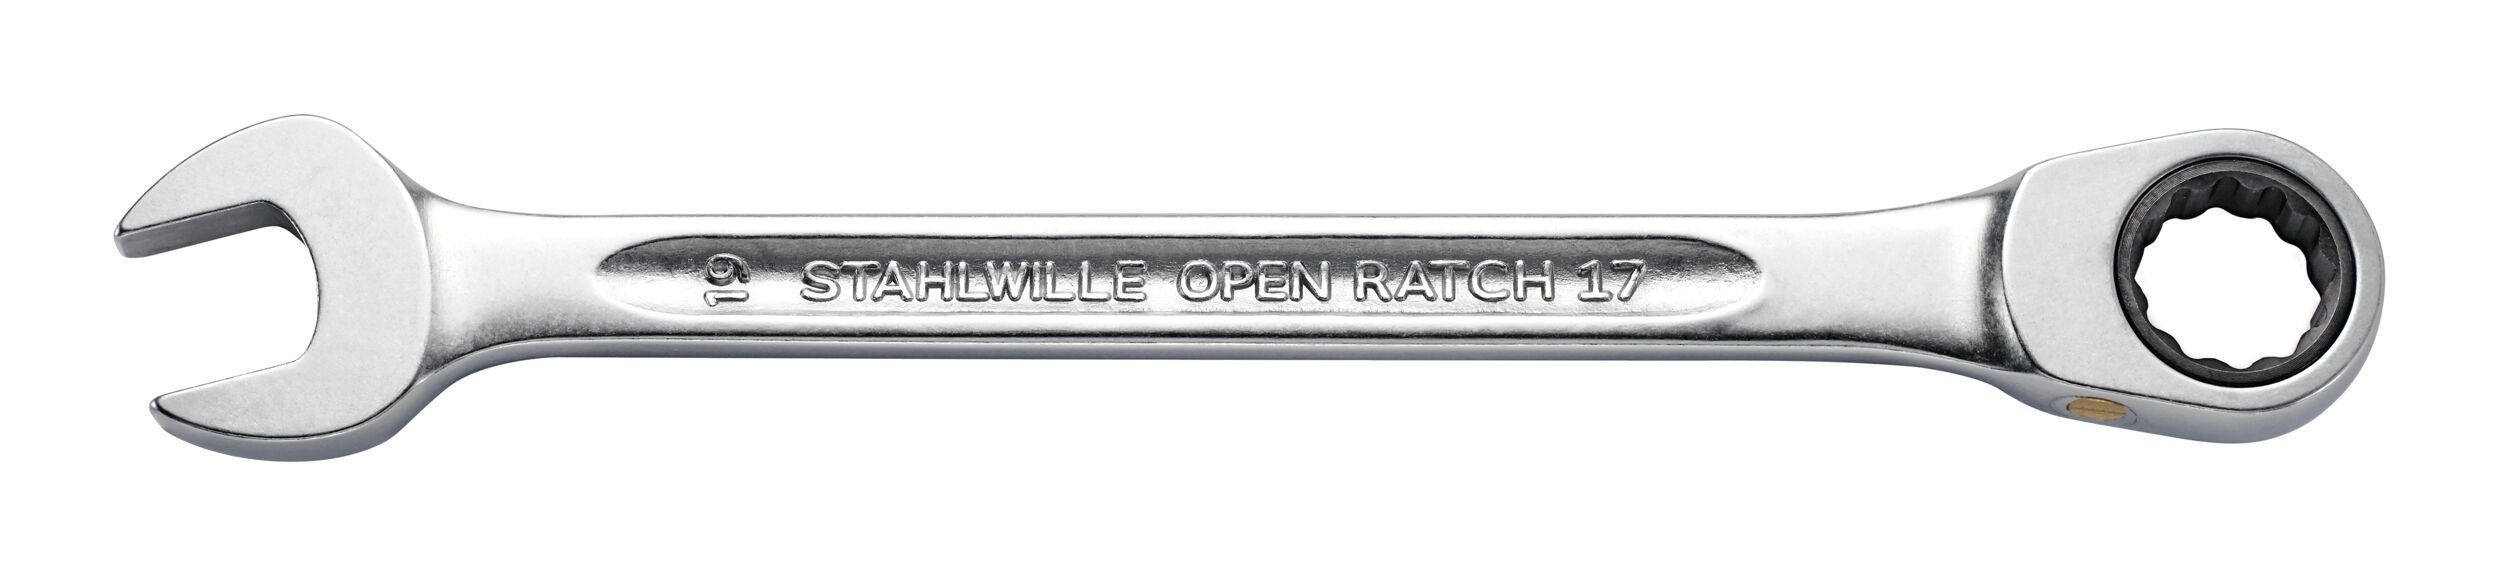 Stahlwille Ratschenringschlüssel, Maul-Ringratschen-Schlüssel gerade 17 mm